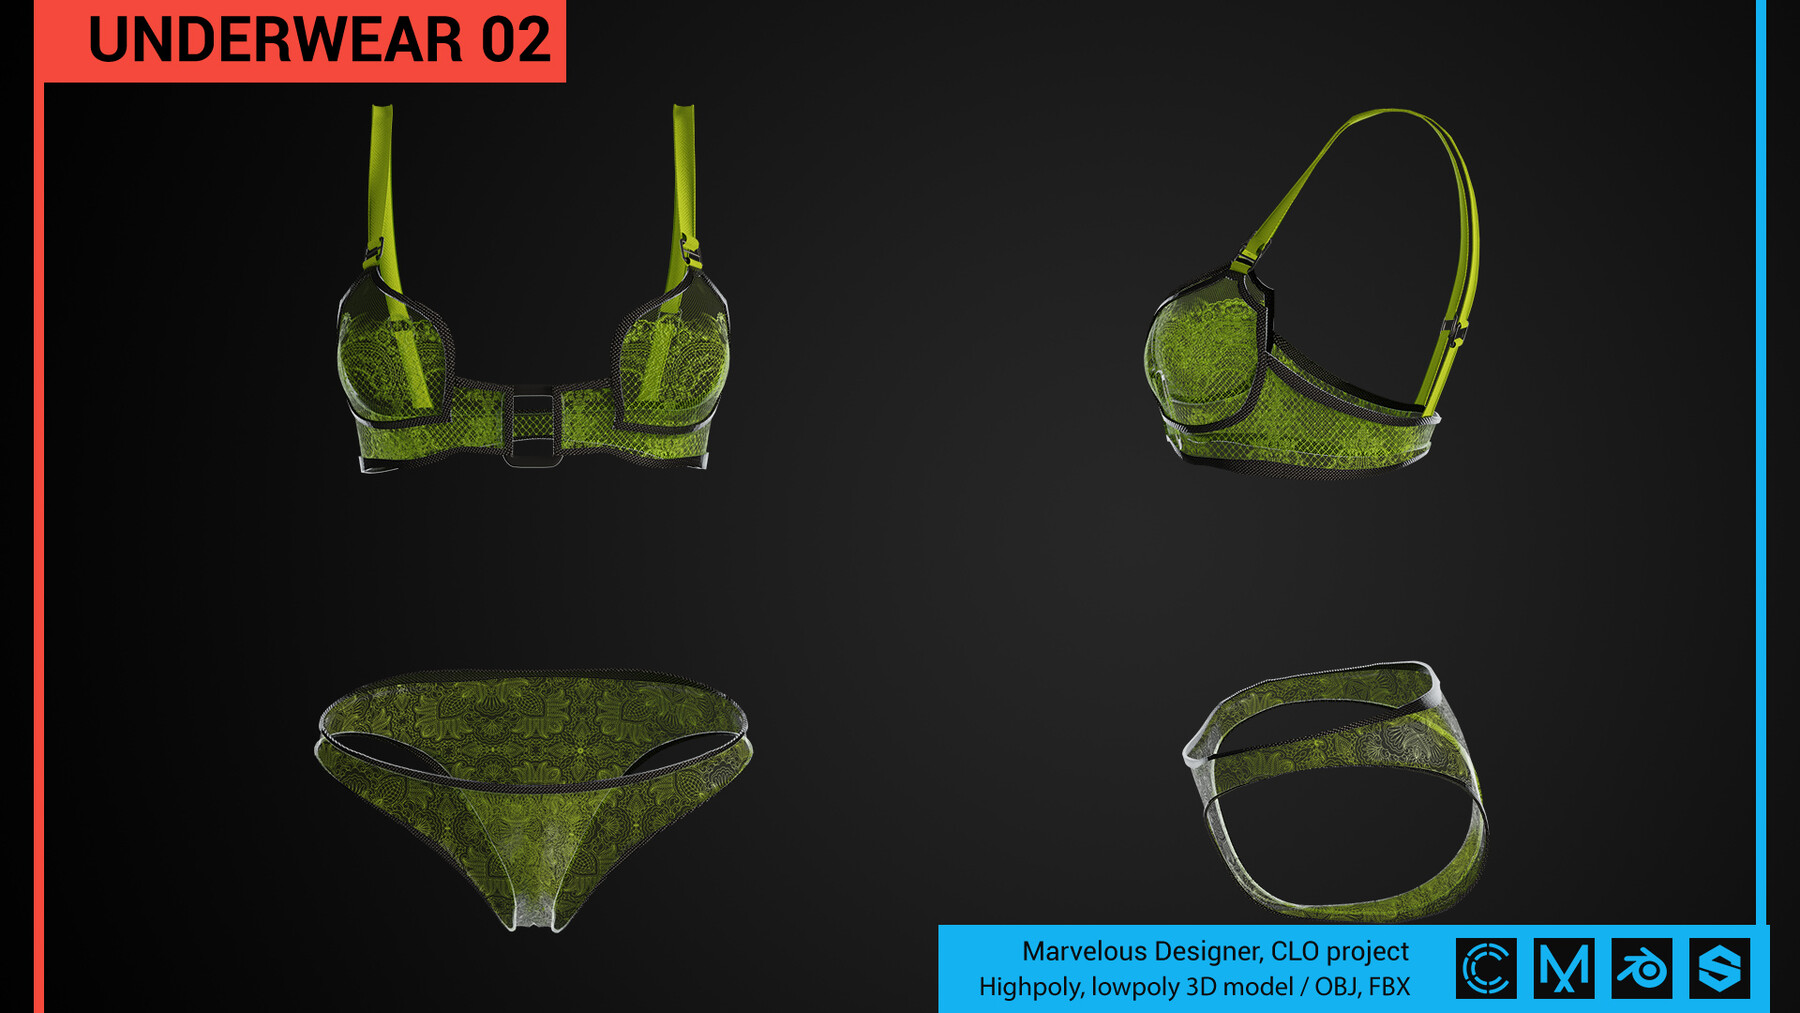 ArtStation - Underwear 02 - Marvelous Designer, CLO project.